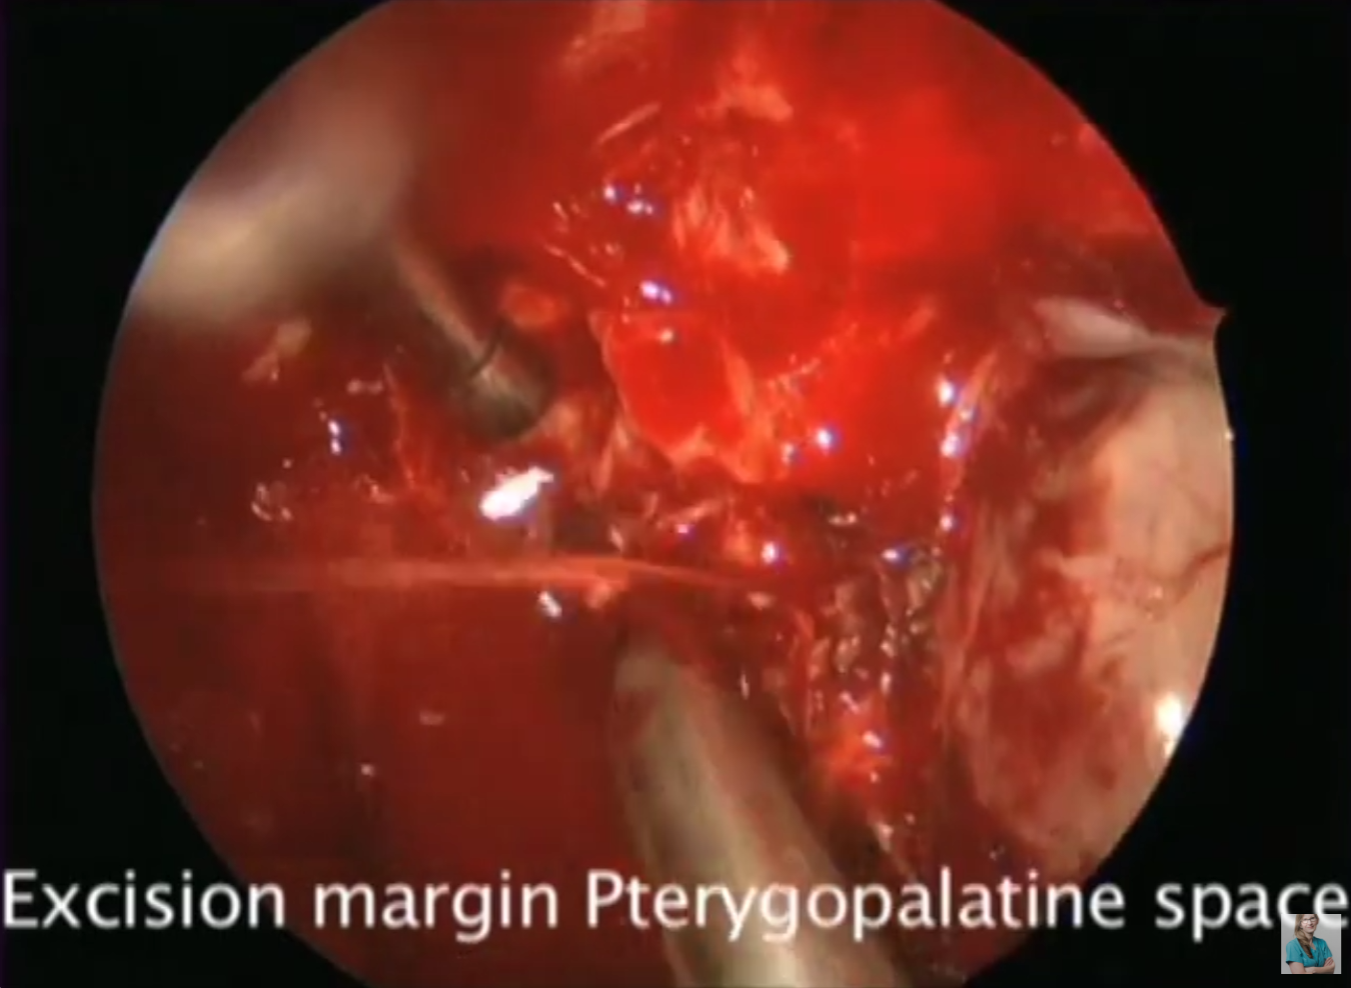 Sphenopalatine artery endoscopically video thumbnail.